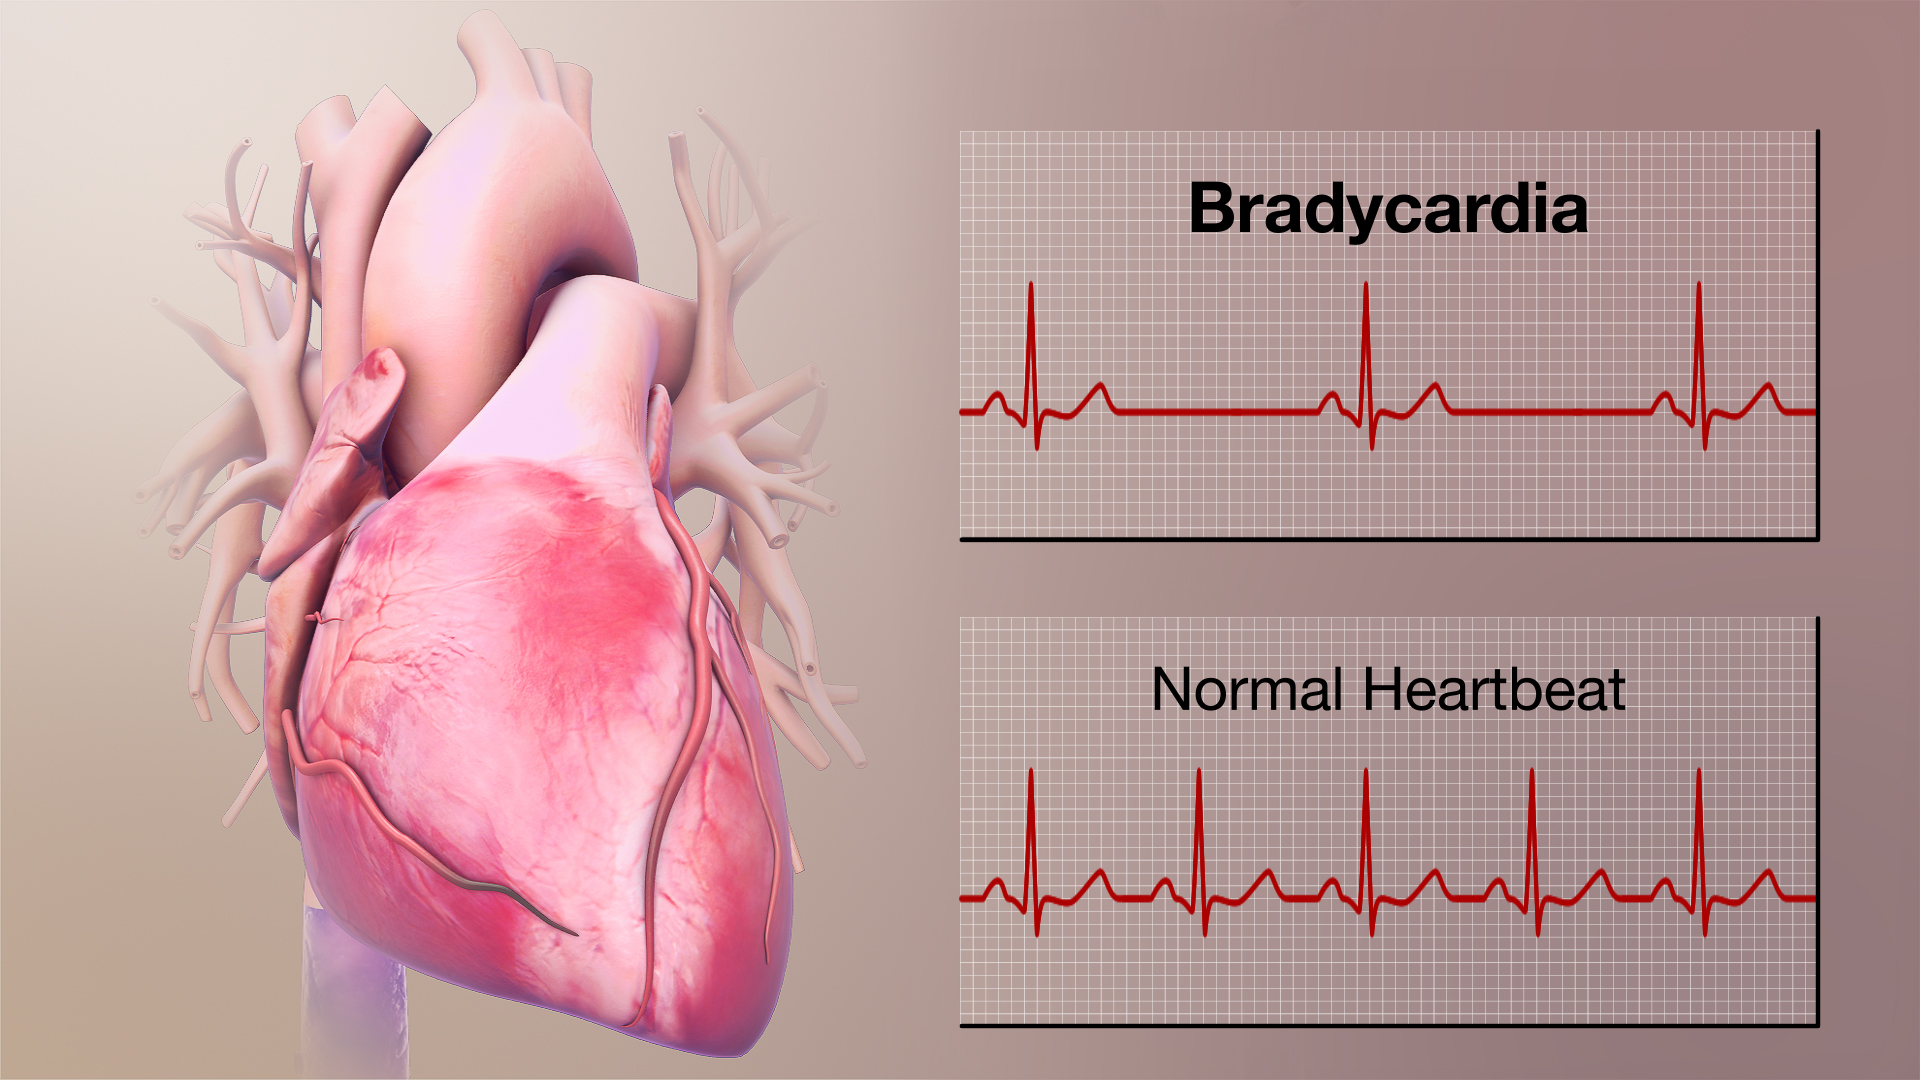 3D Medical Animation Depicting Bradycardia Vs. Normal Heartbeat